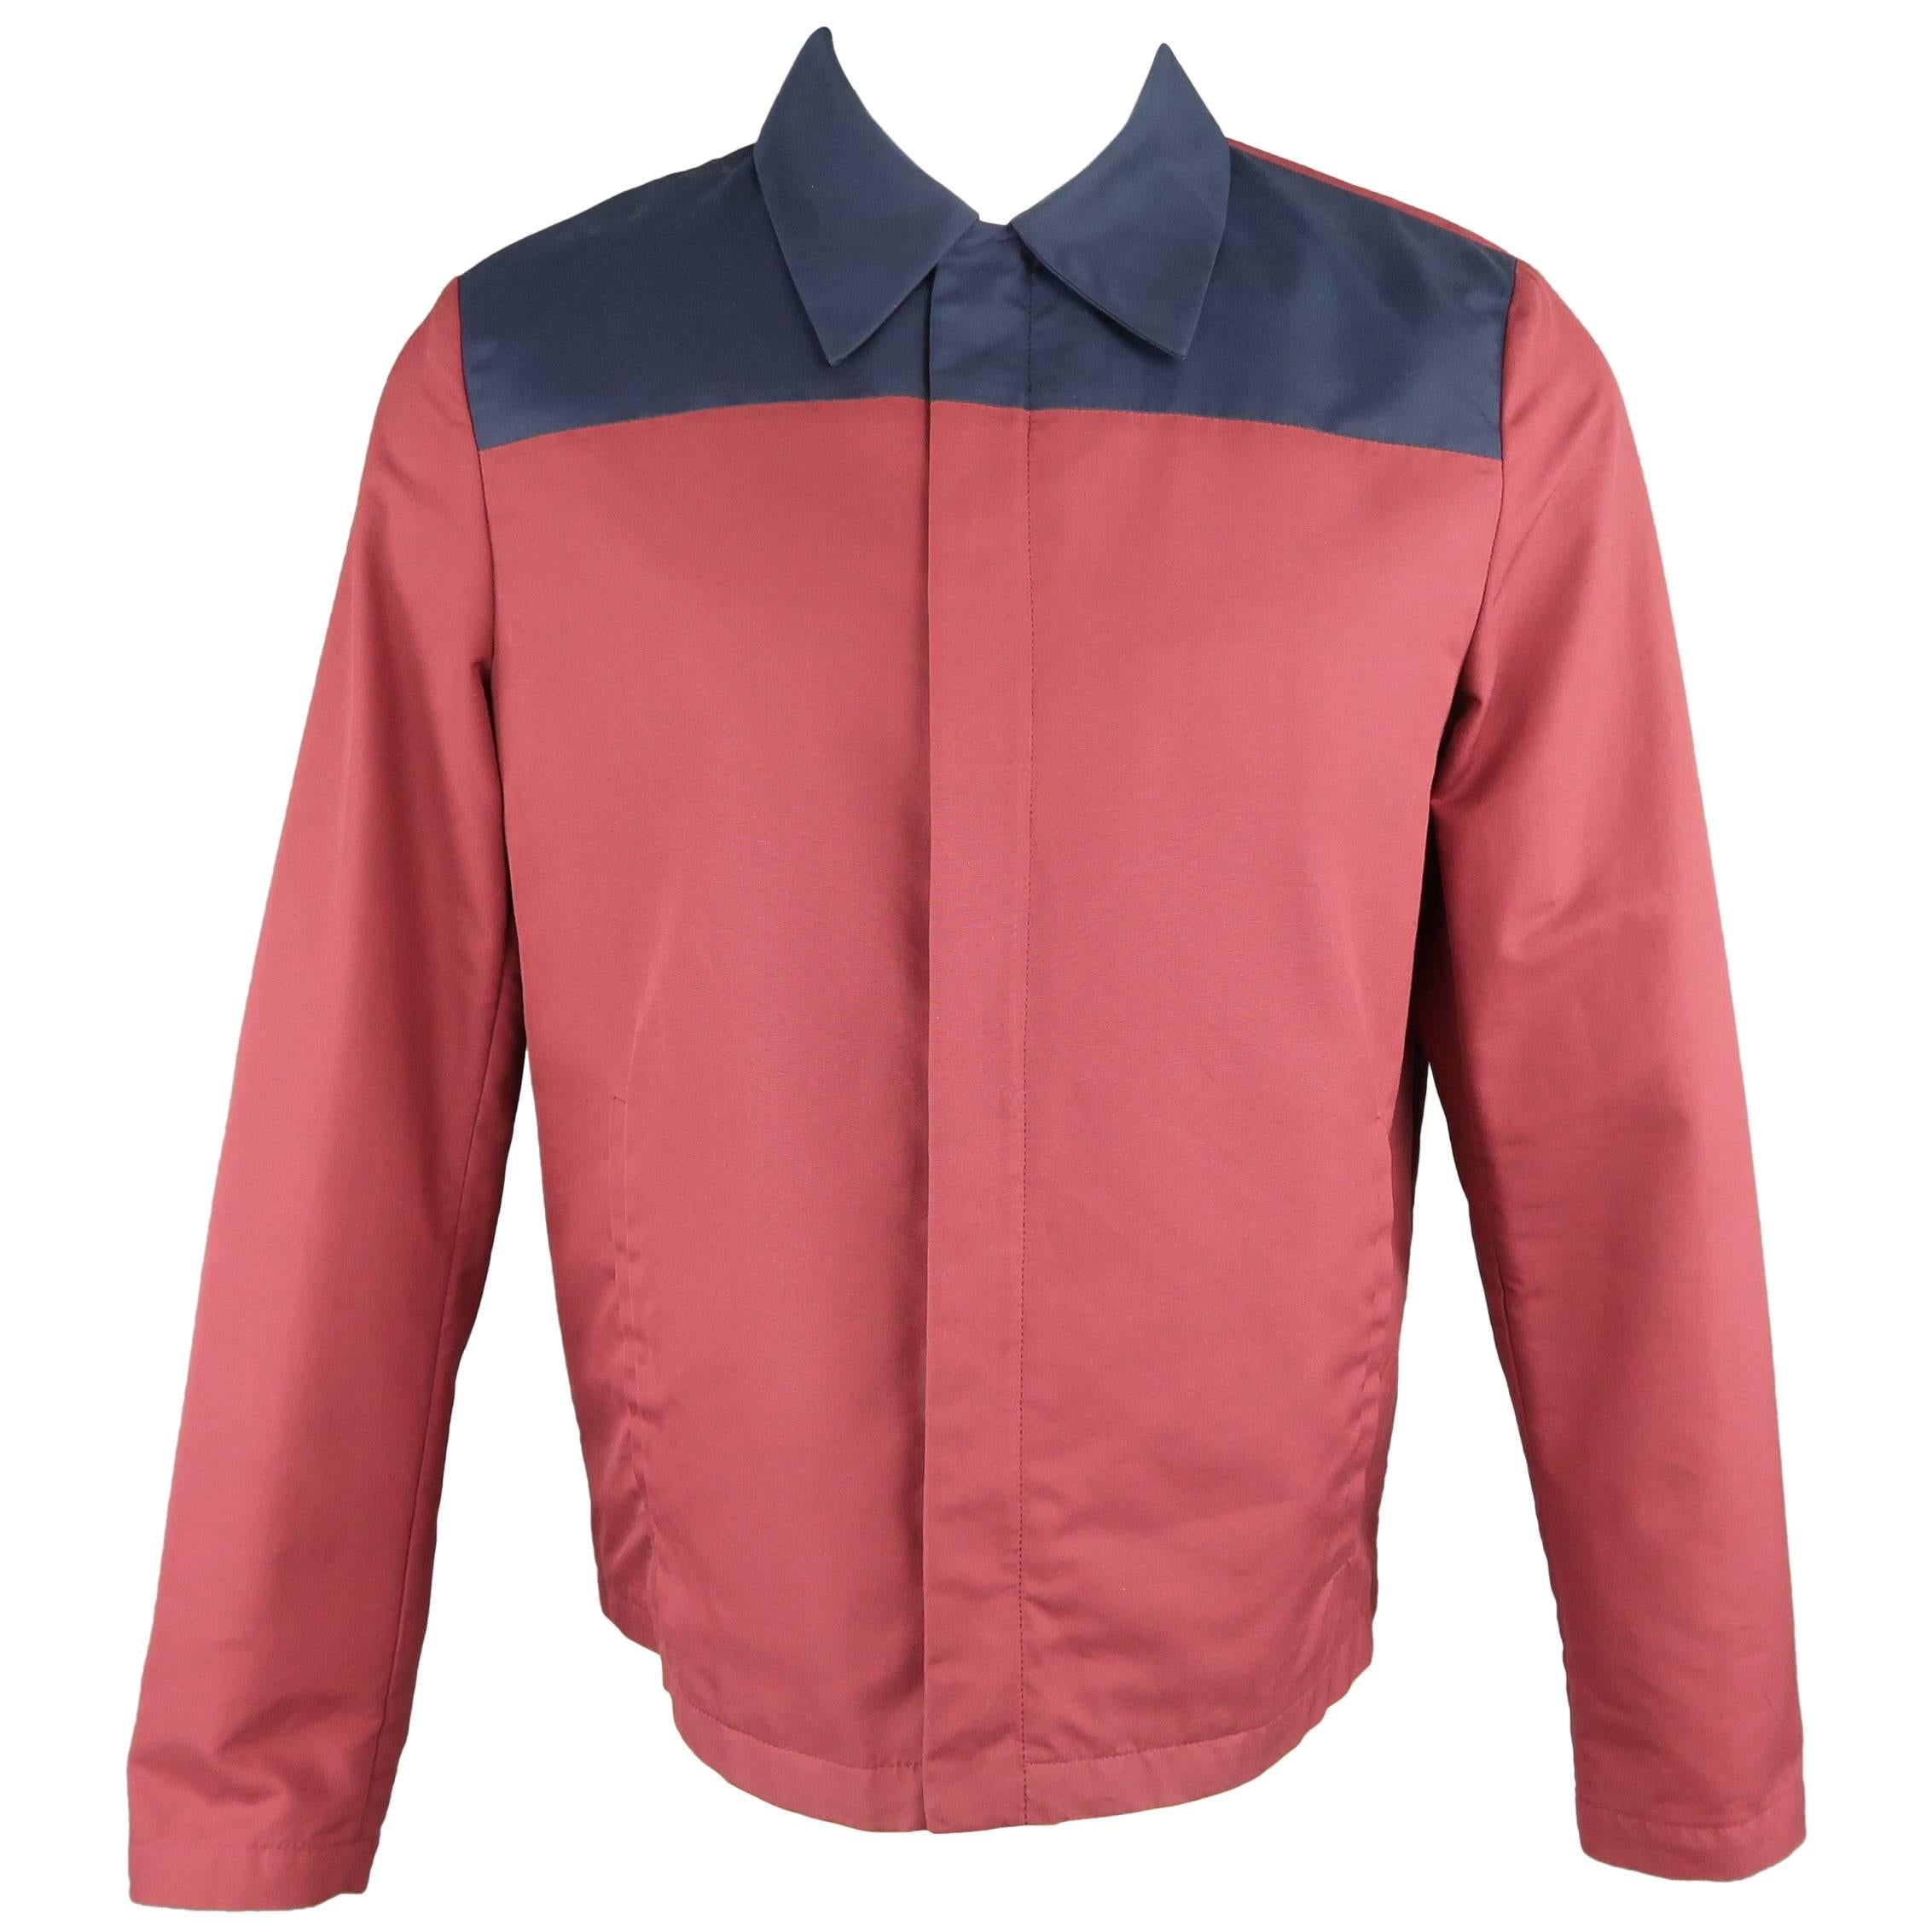 Men's PRADA 38 Burgundy & Navy Two Toned Cotton Blend Blouson Jacket